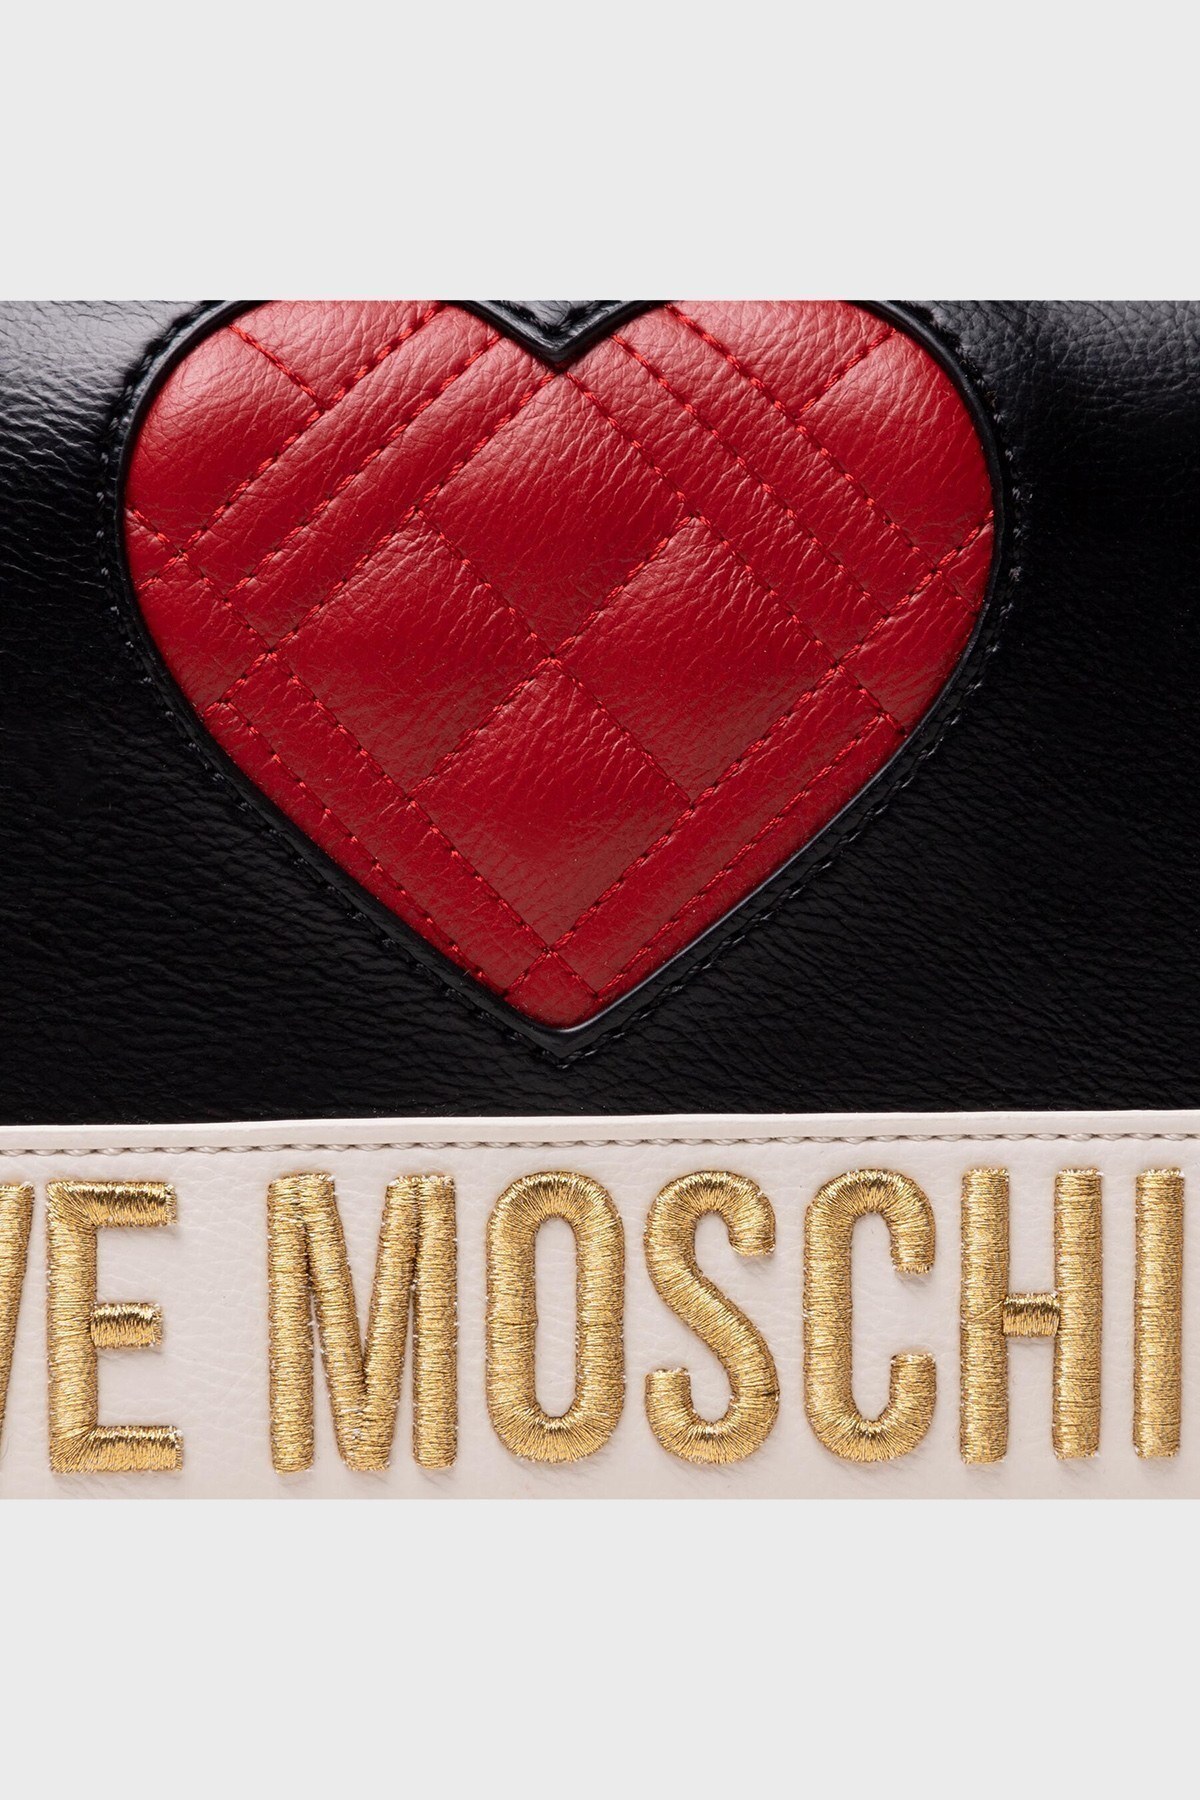 Love Moschino Logolu Zincir Askılı Bayan Çanta JC4061PP1ELD100A SİYAH-KIRMIZI